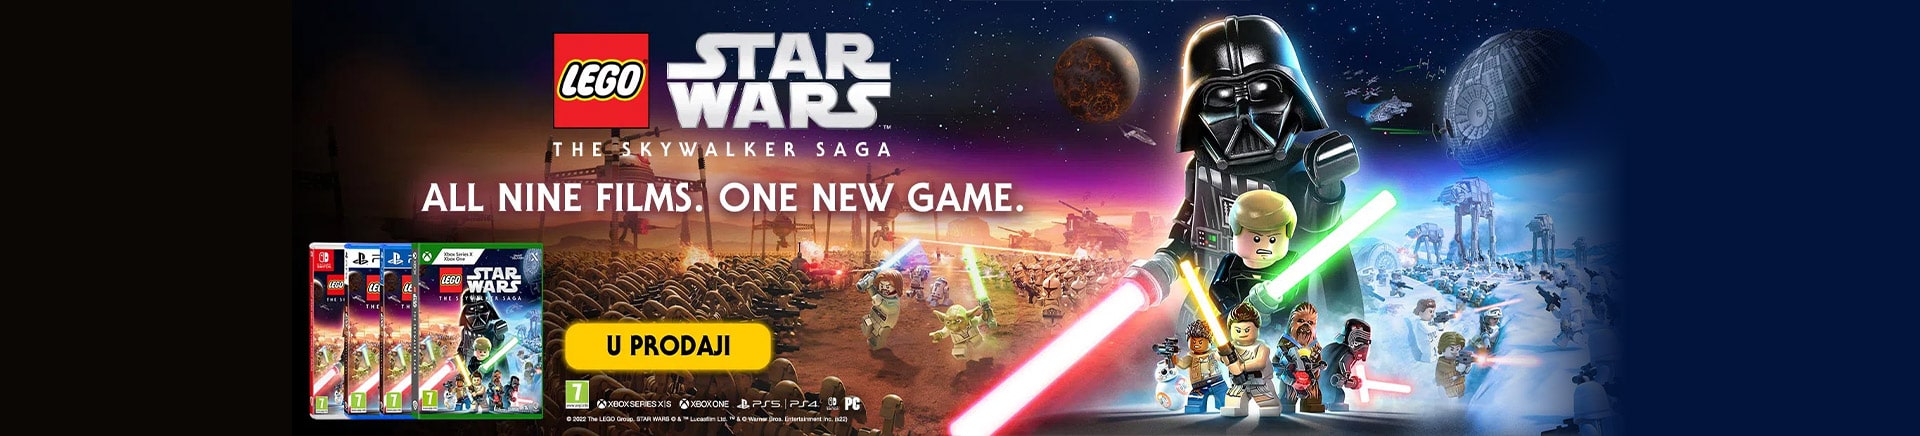 LEGO Star Wars filmovi i nova igra